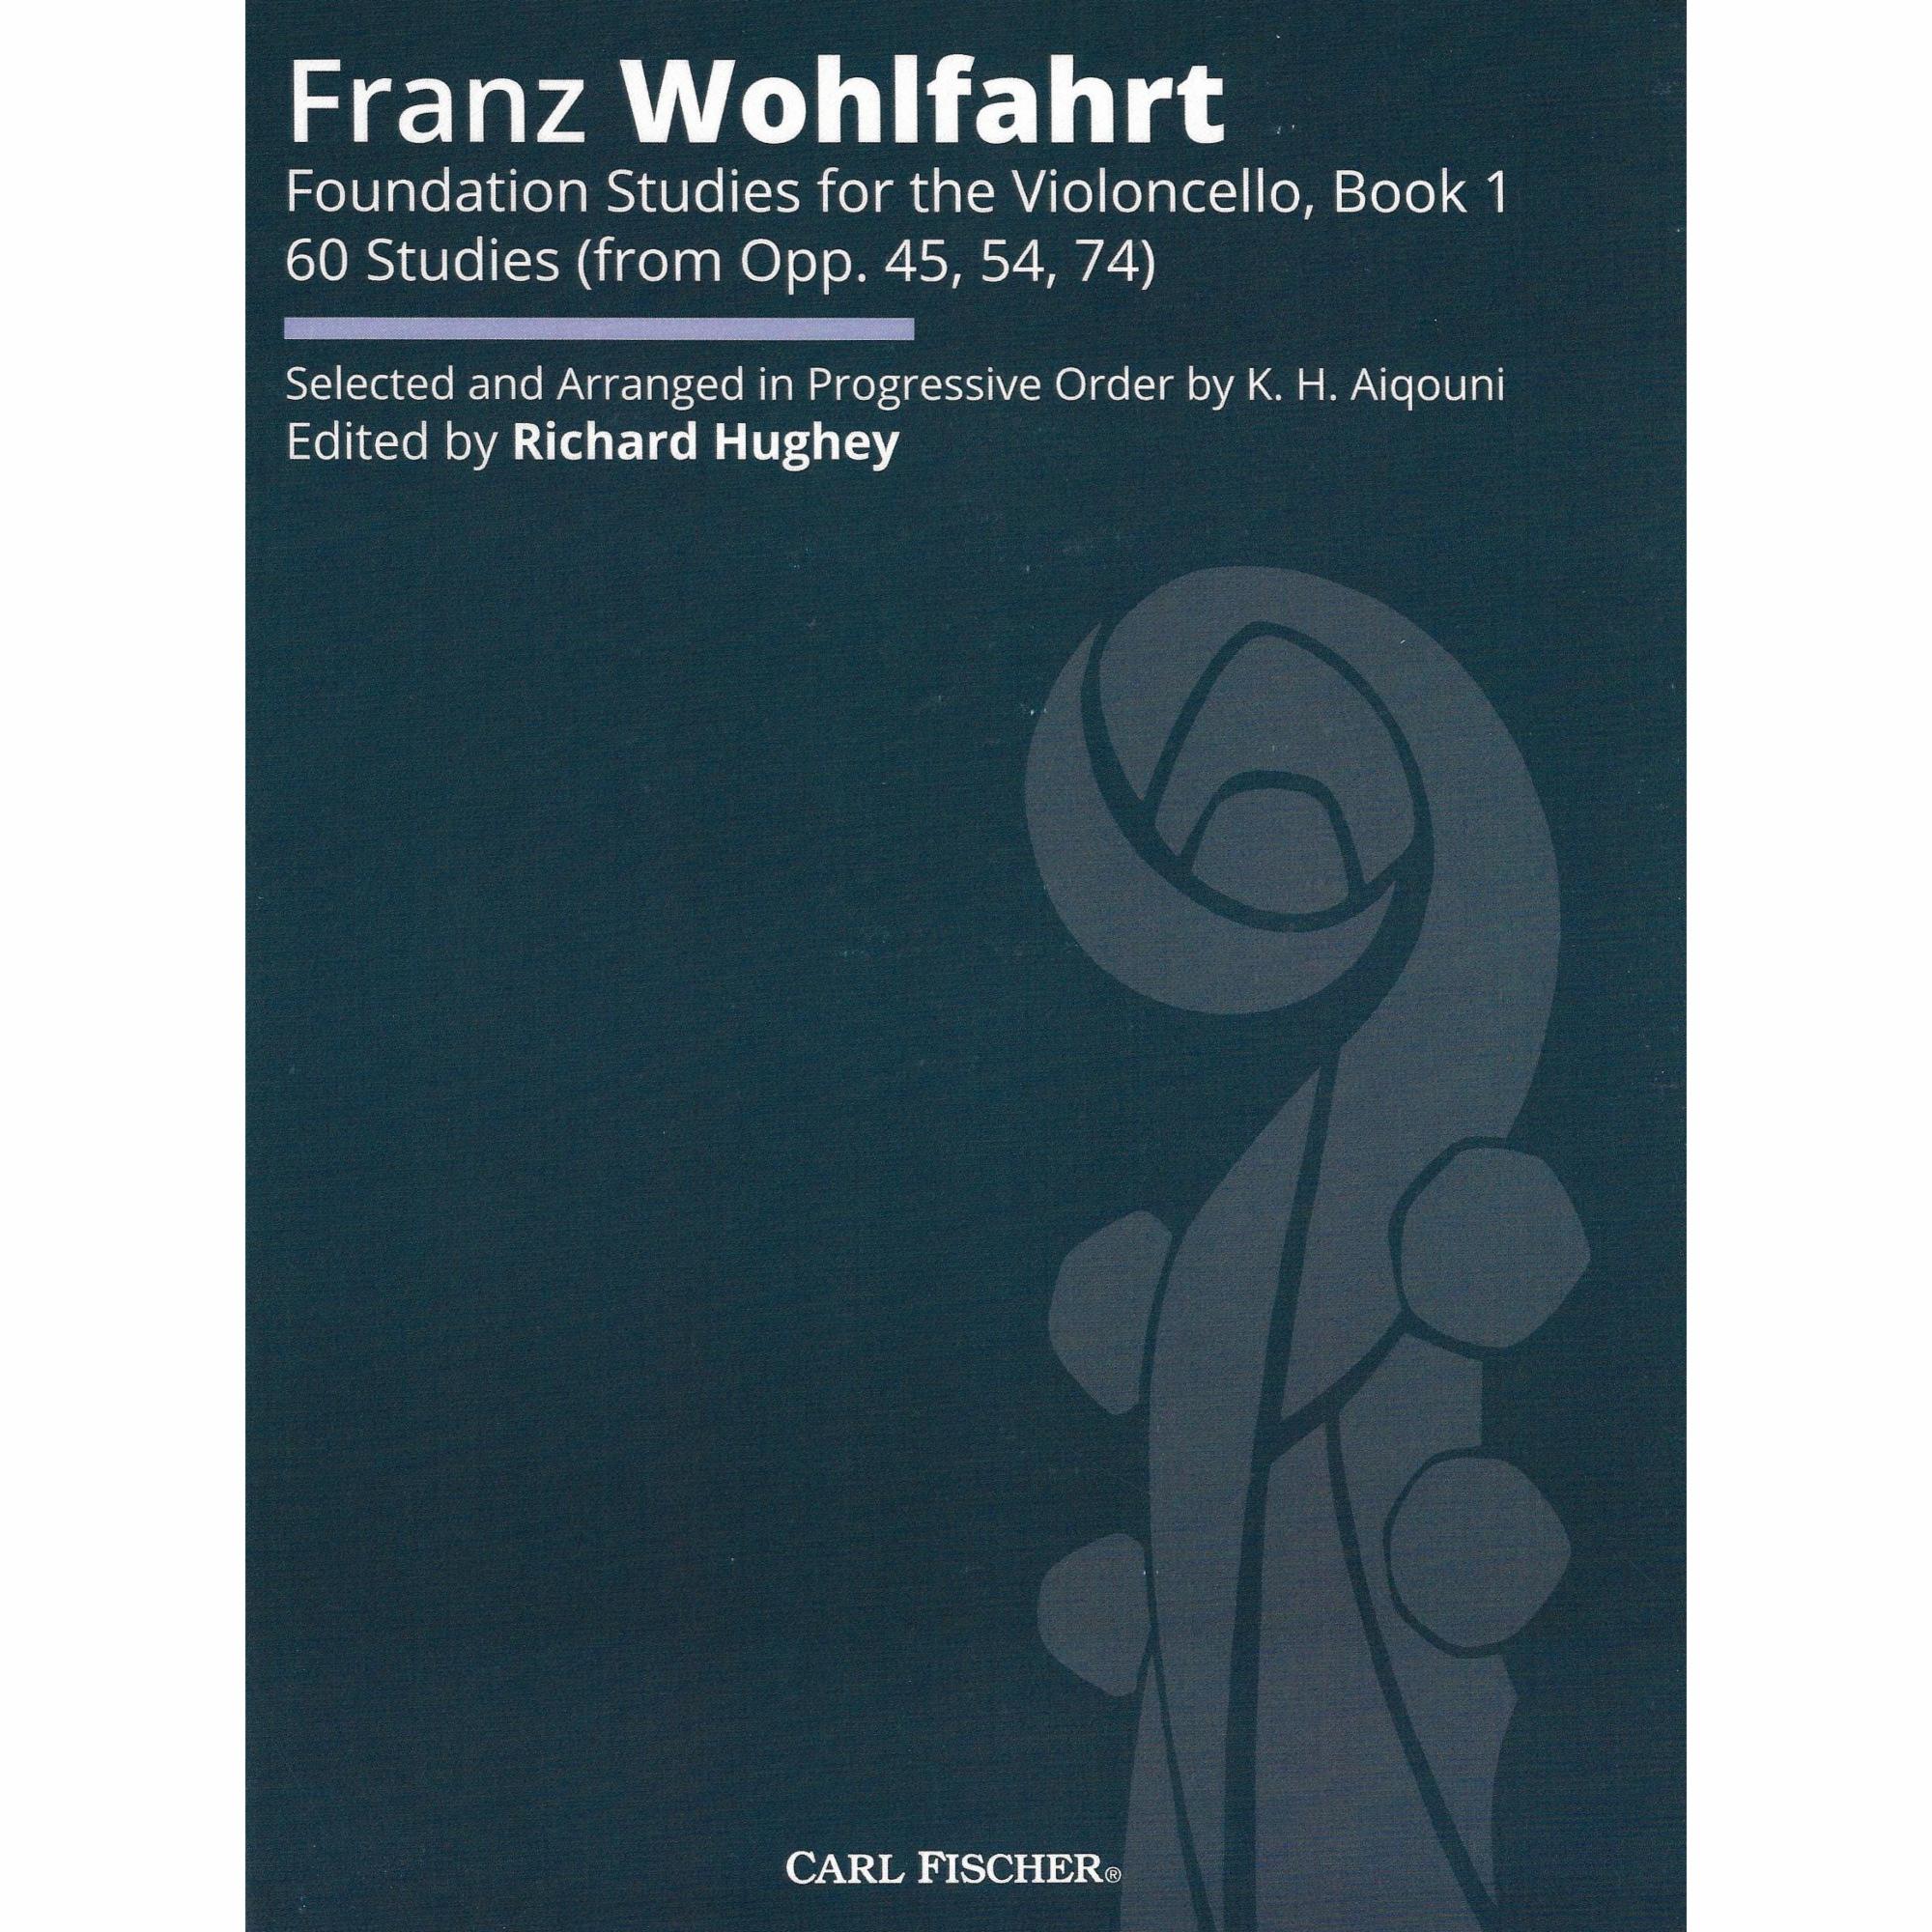 Wohlfahrt -- 60 Foundation Studies for Cello